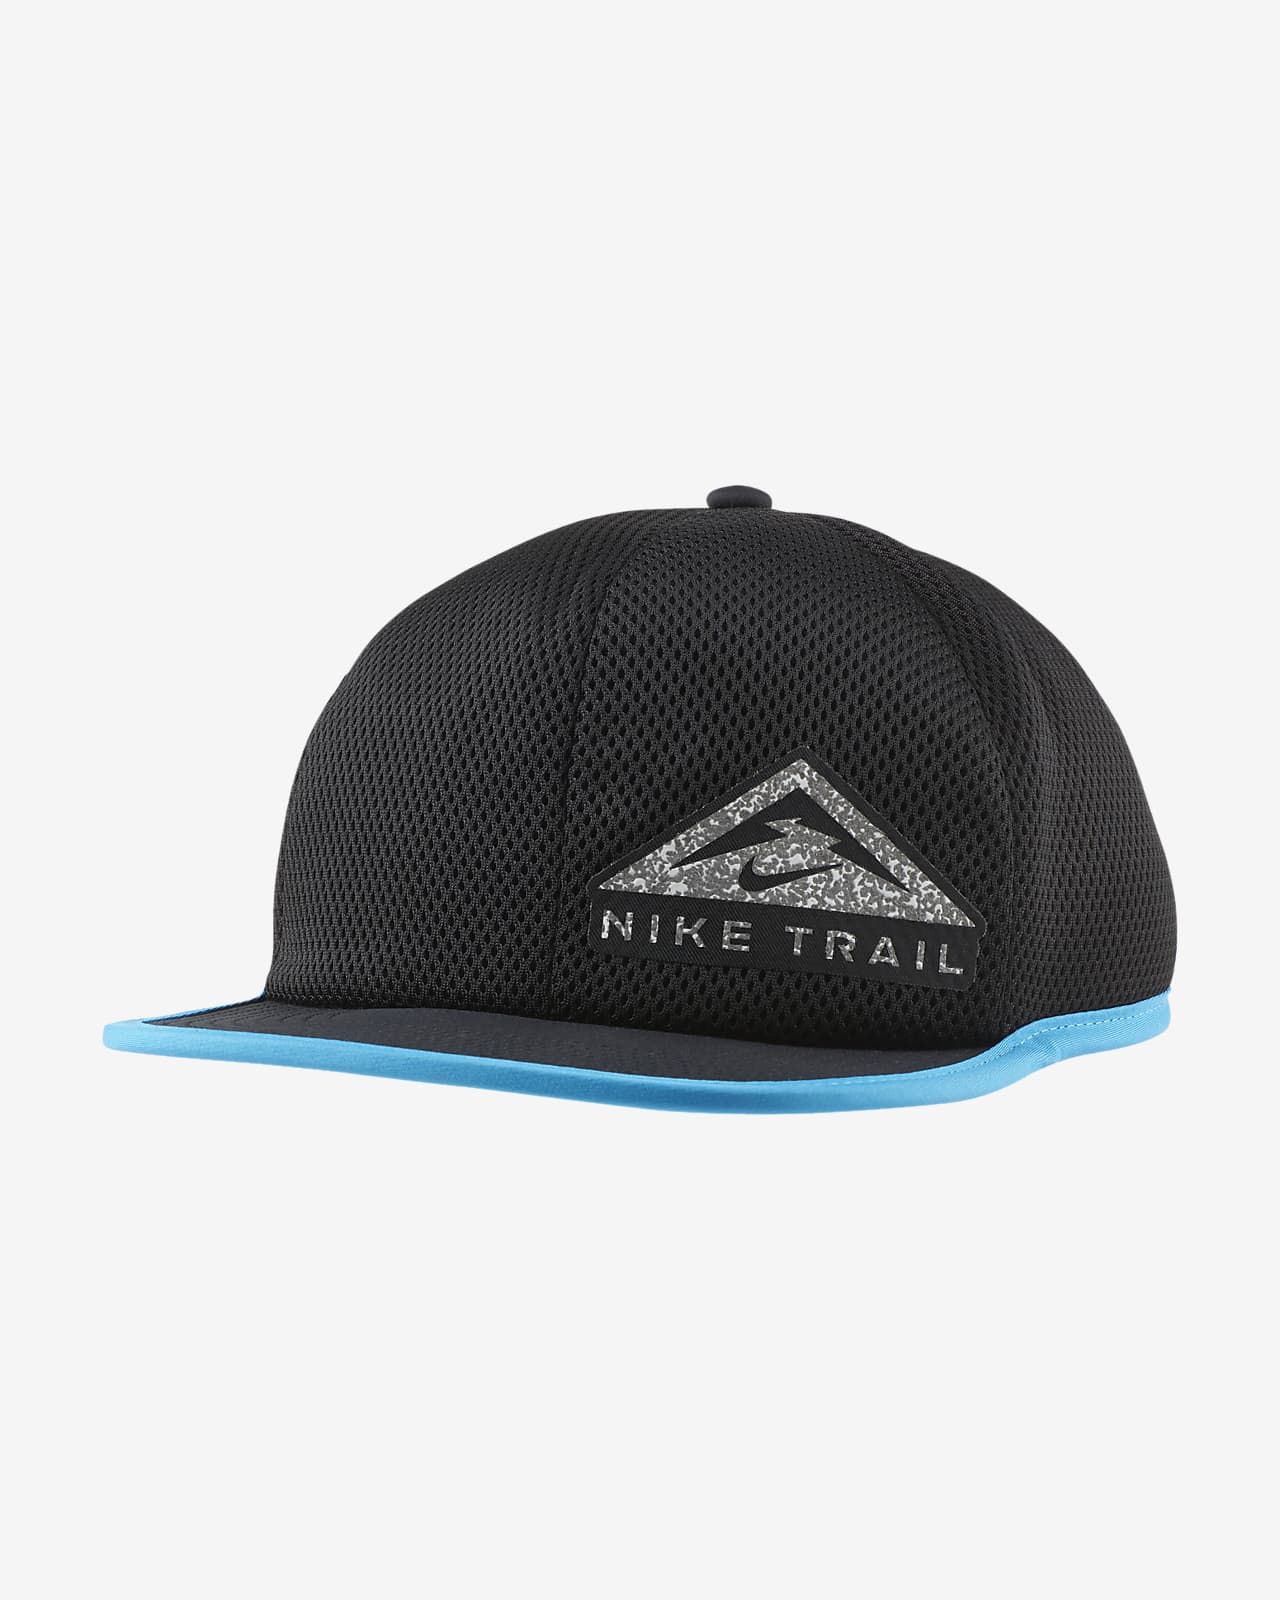 nike trail aw84 hat